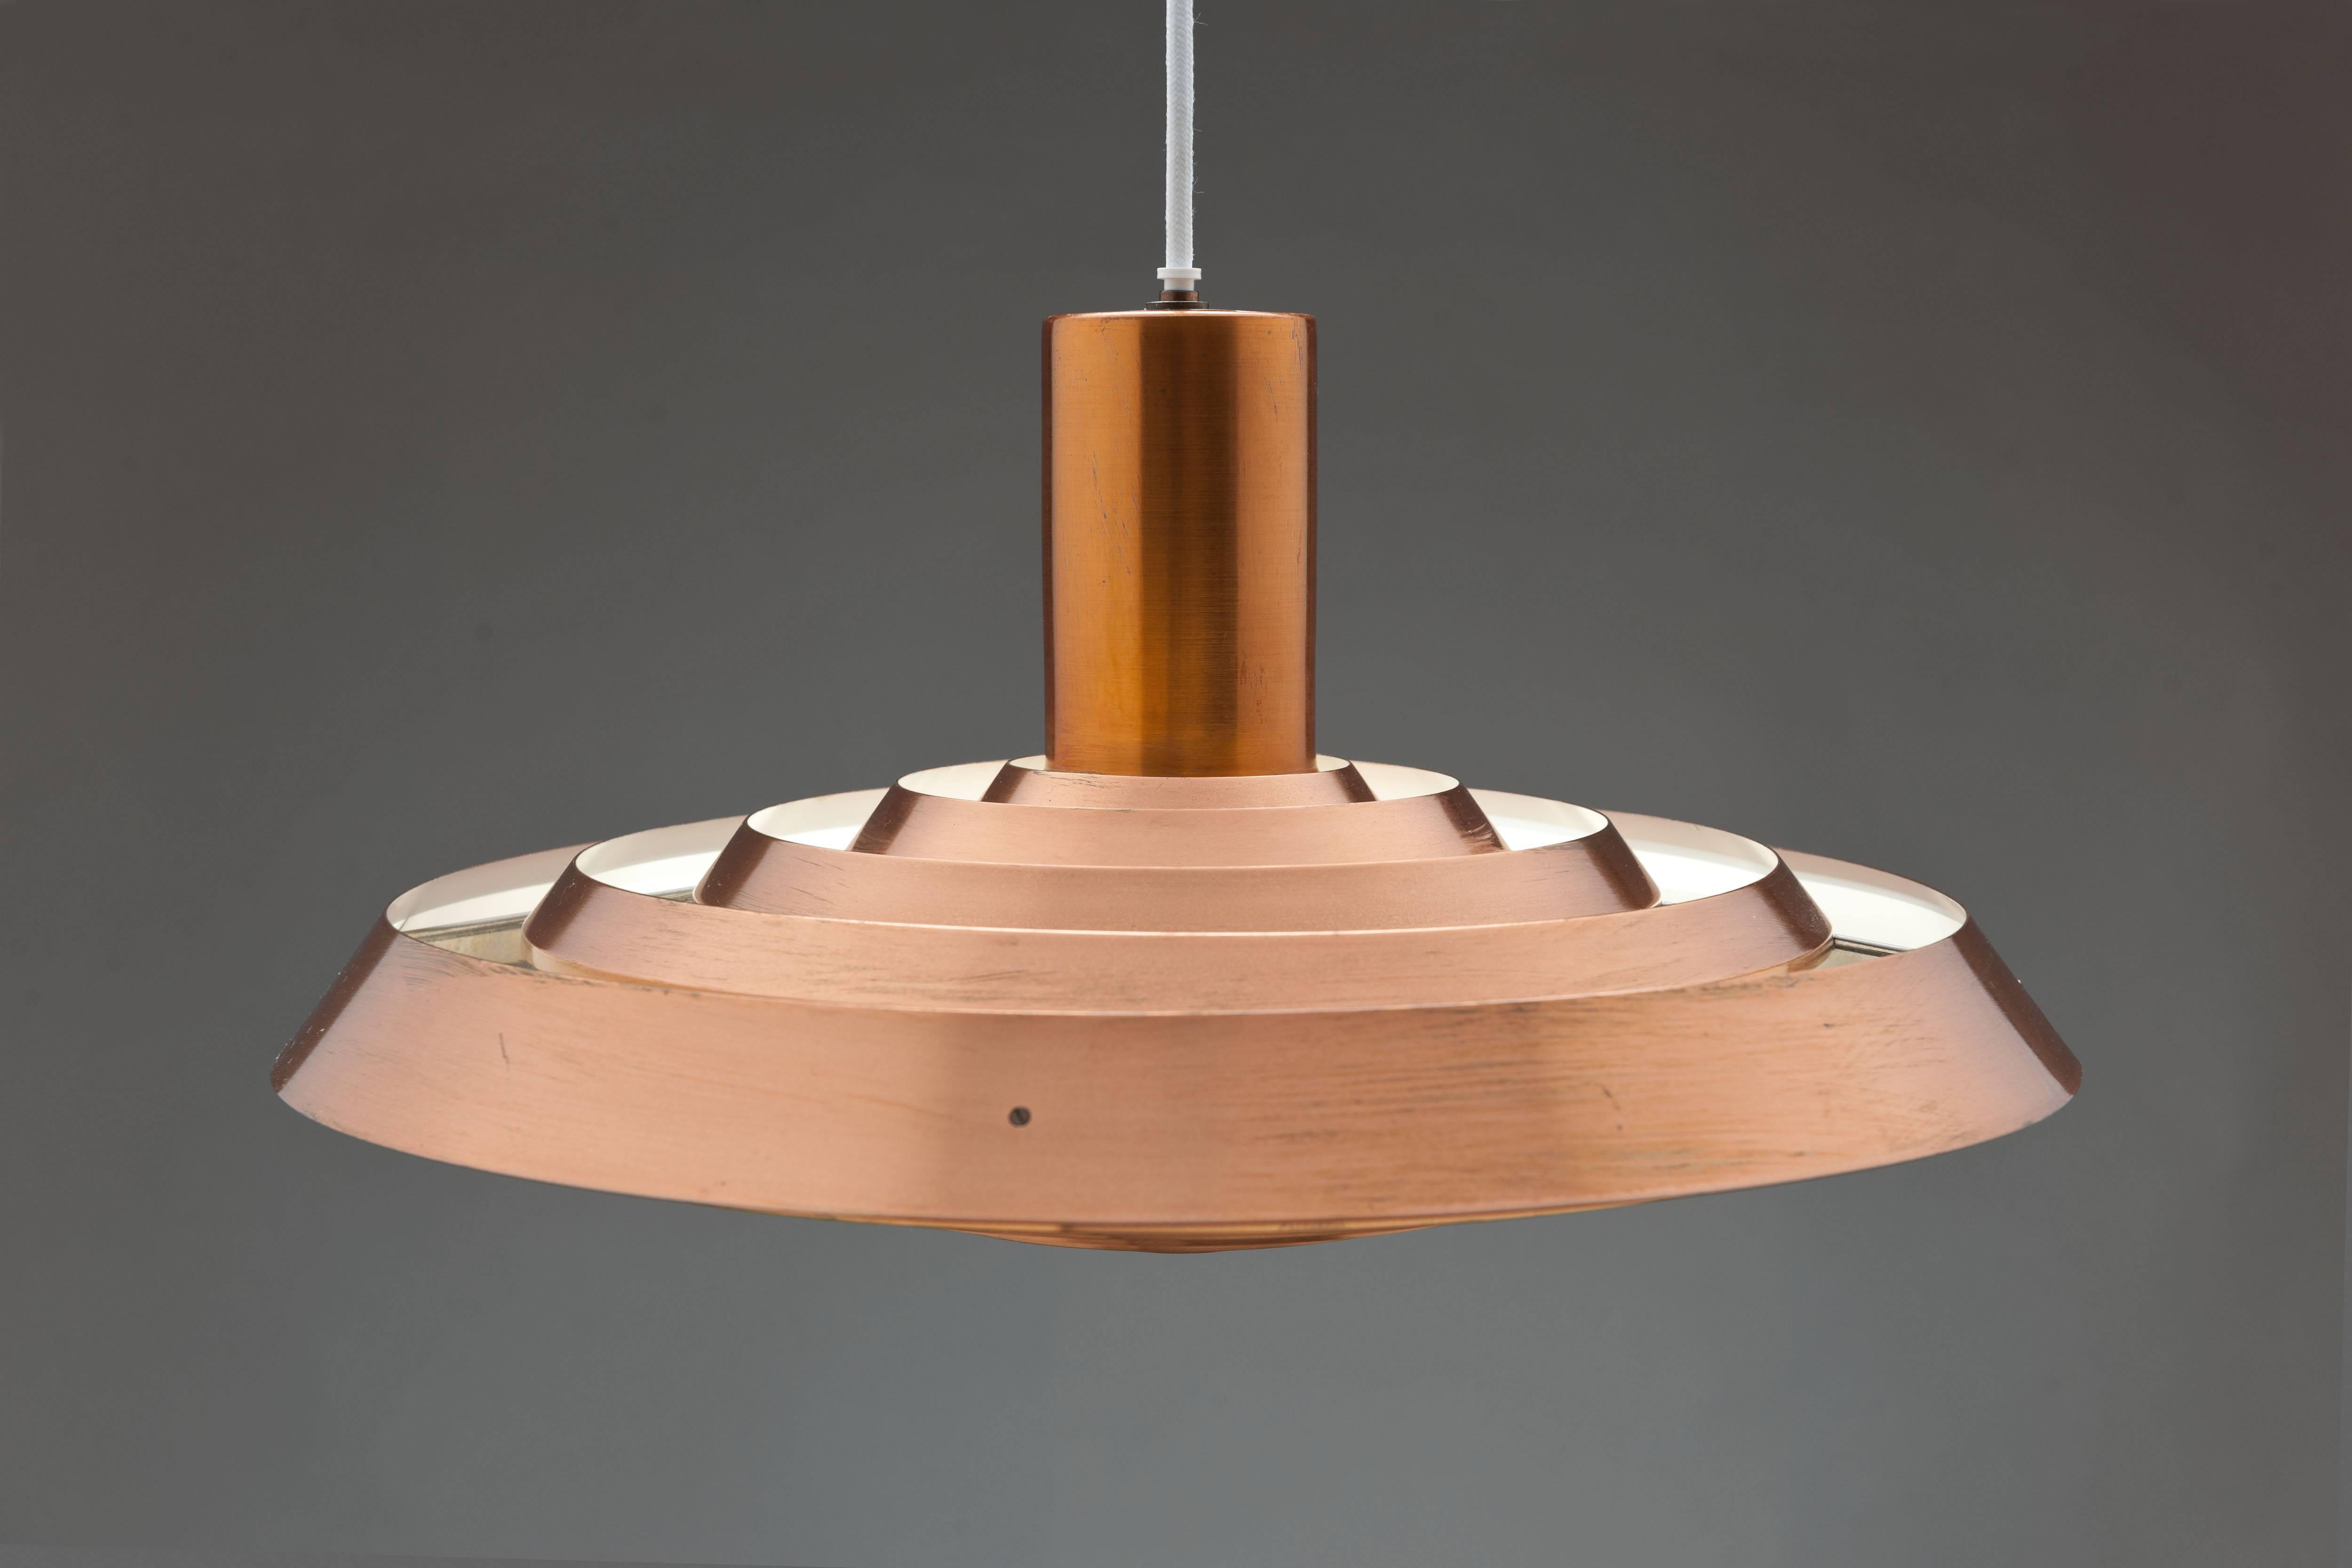 Danish Copper Poul Henningsen, Louis Poulsen Langelinie Plate Lamp, 1958